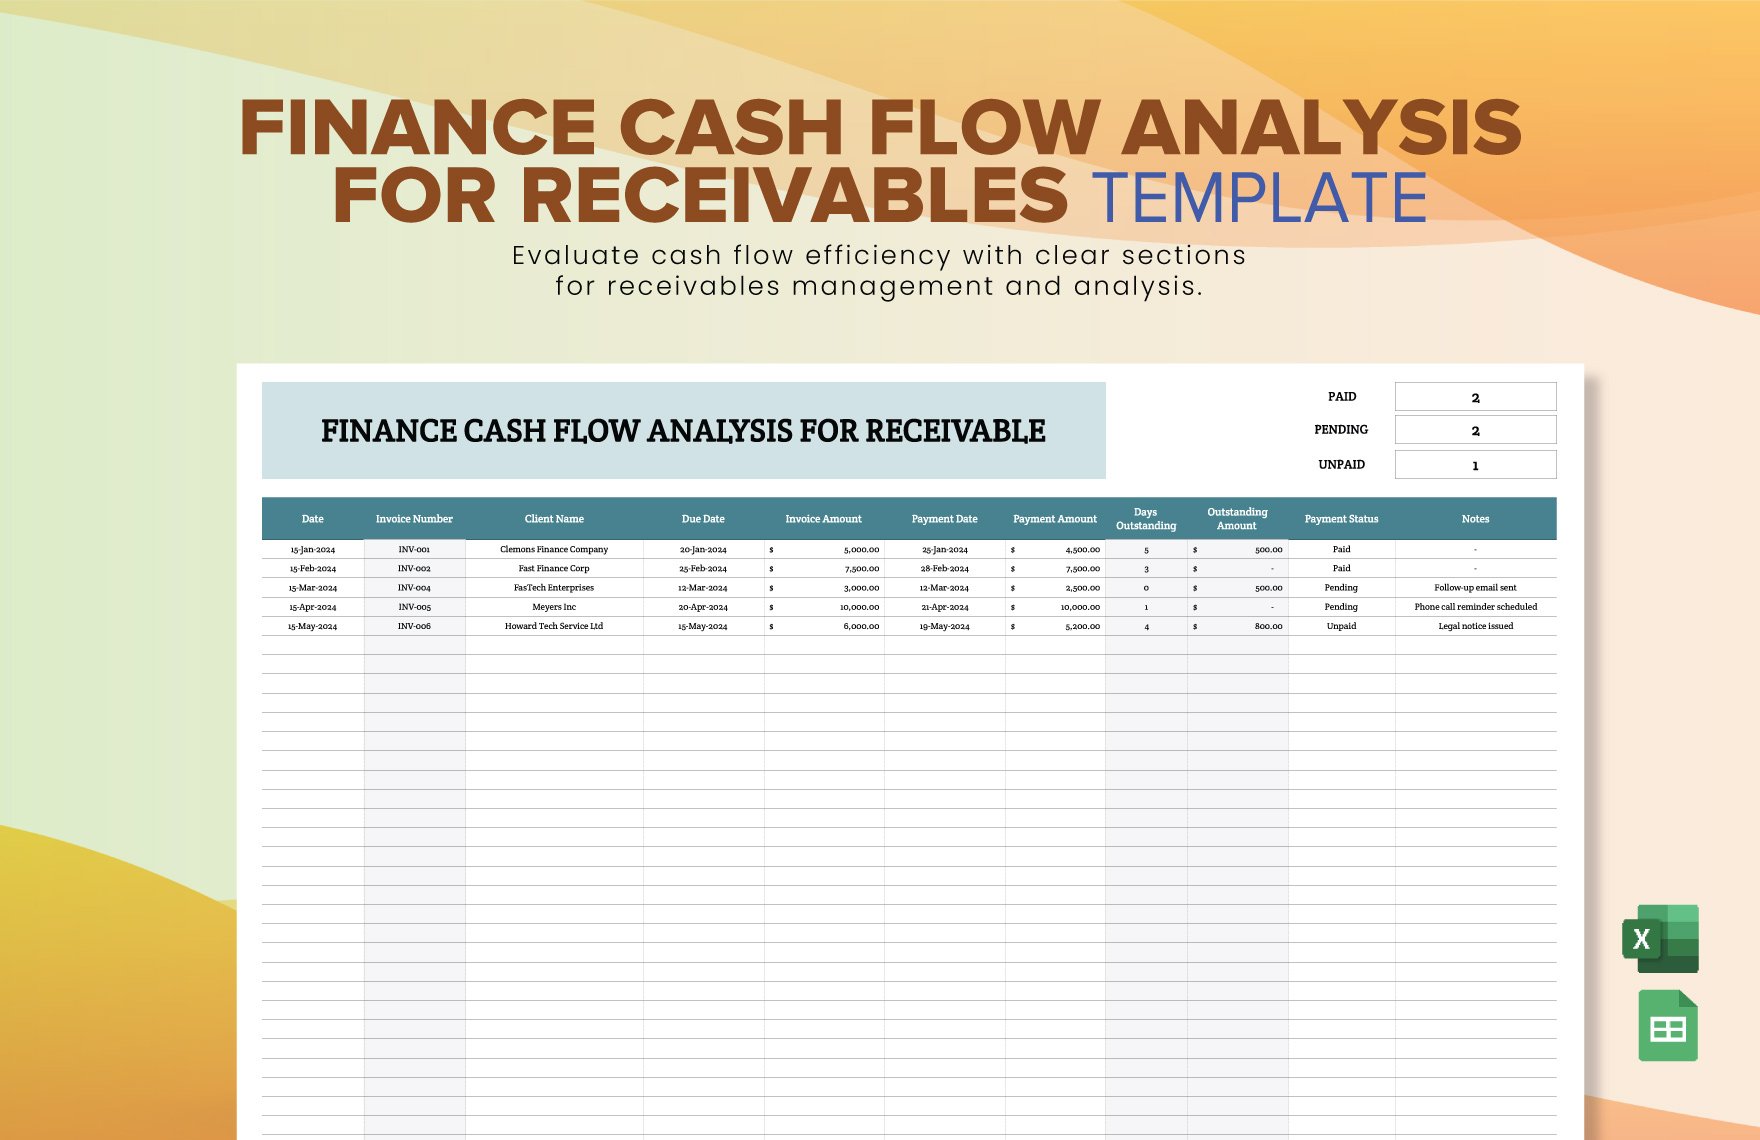 Finance Cash Flow Analysis for Receivables Template